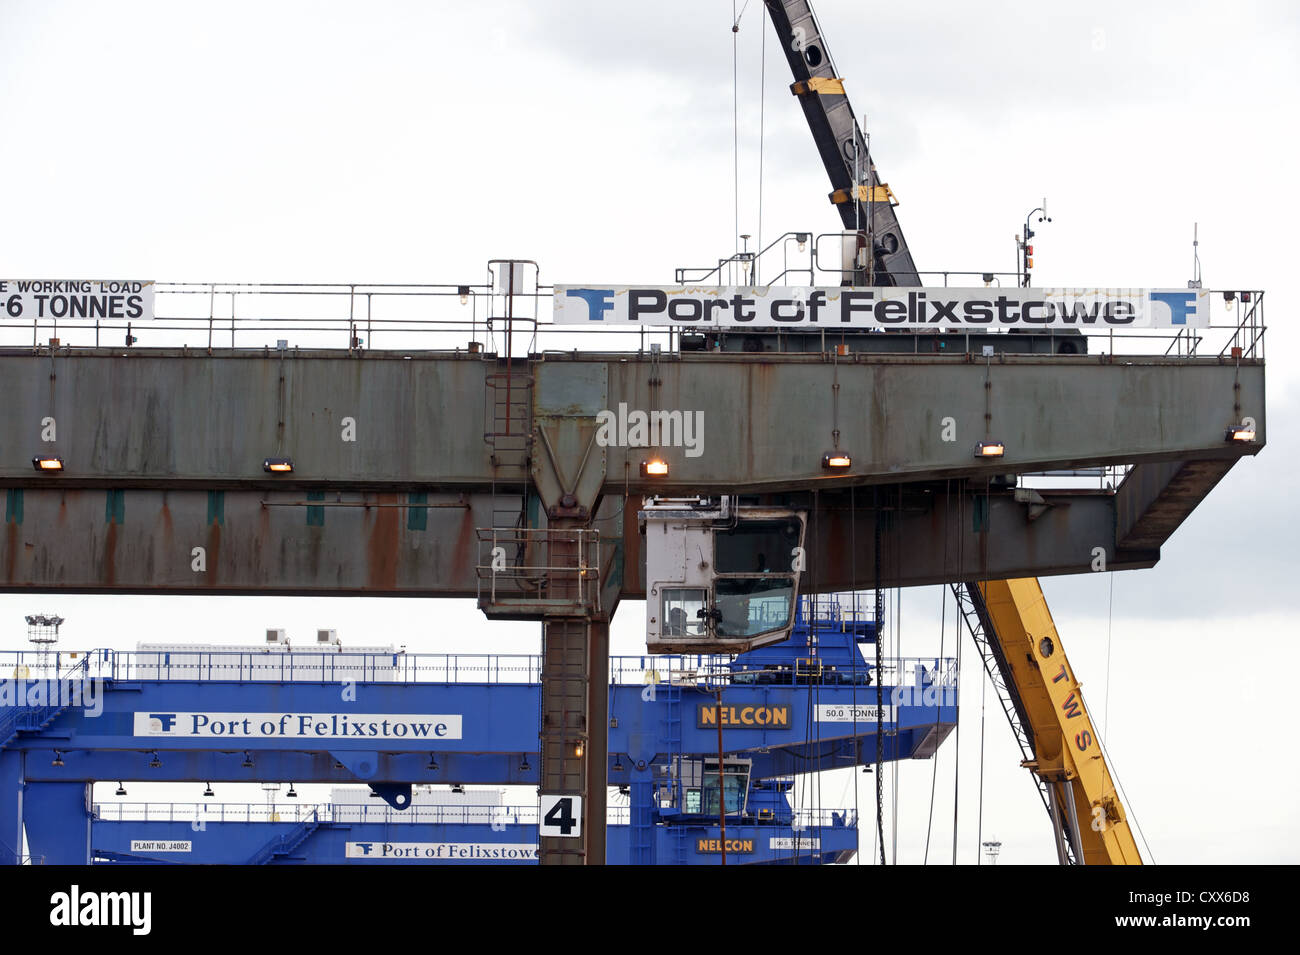 Gantry cranes at the North rail freight terminal undergoing maintenance, Port of Felixstowe, UK. Stock Photo